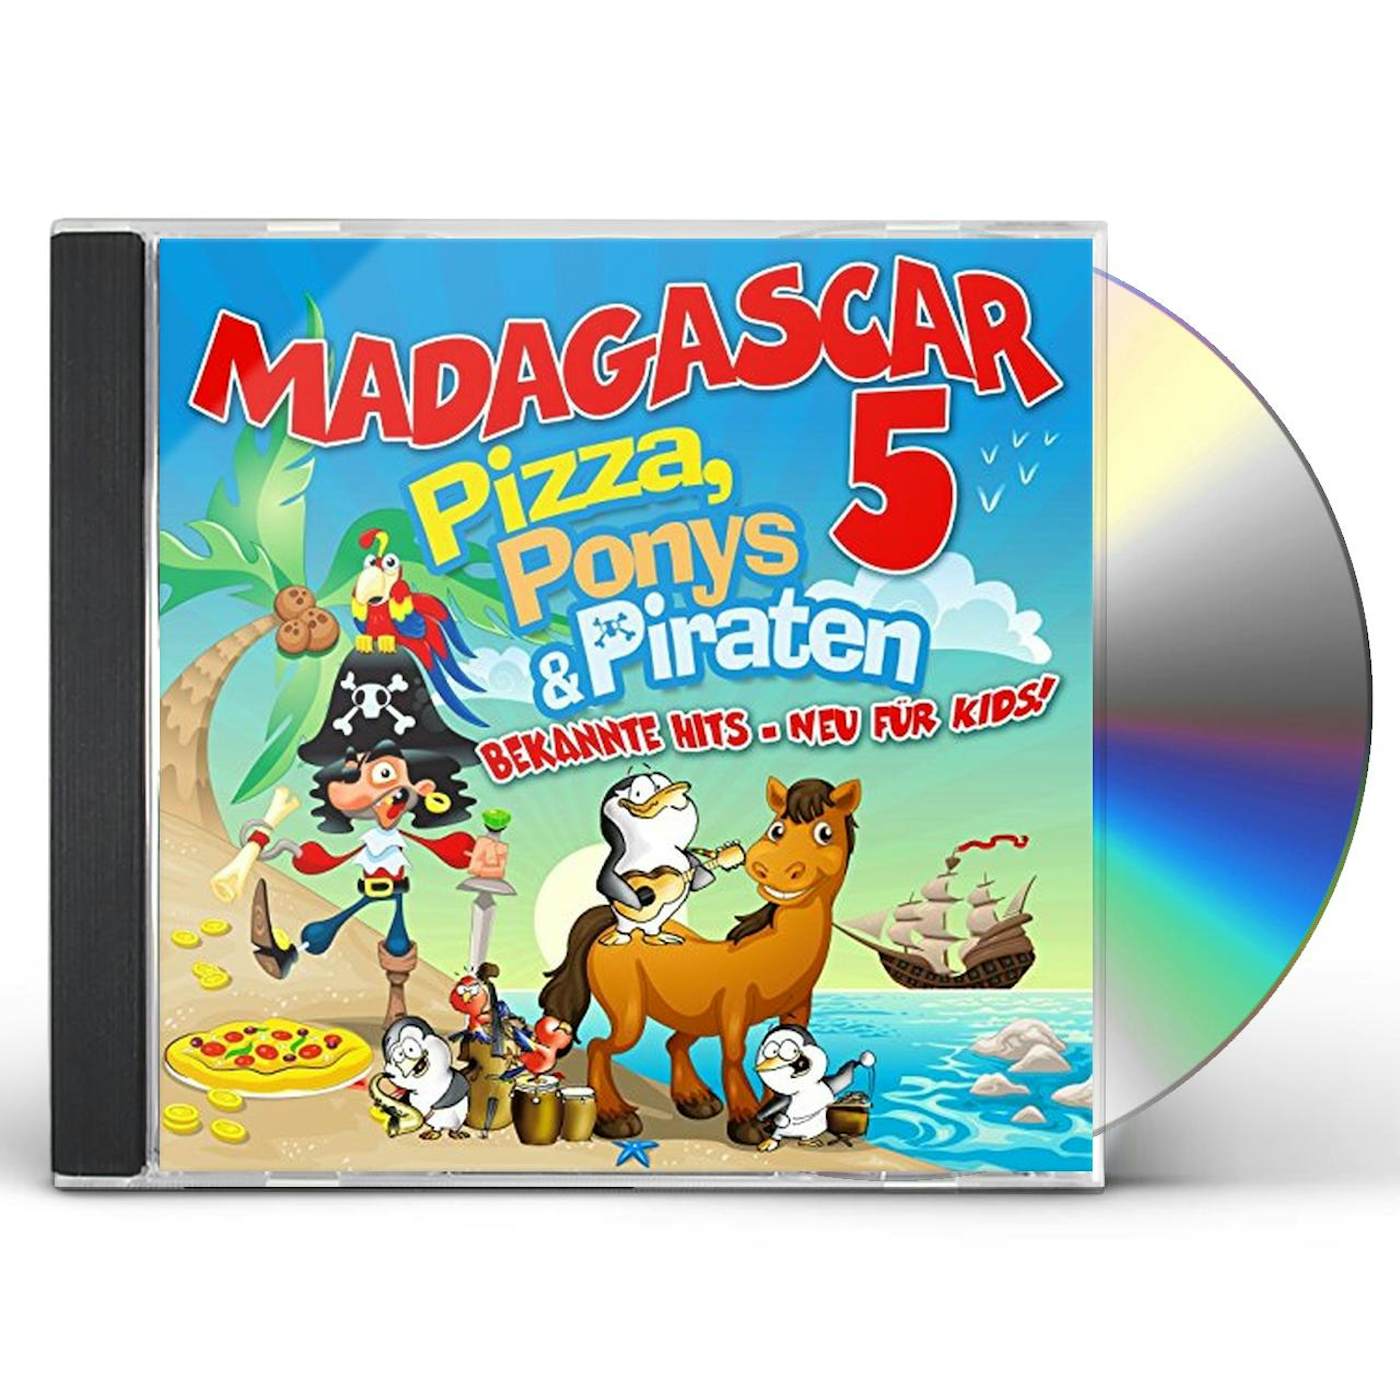 Madagascar 5 PIZZA PONYS & PIRATEN CD